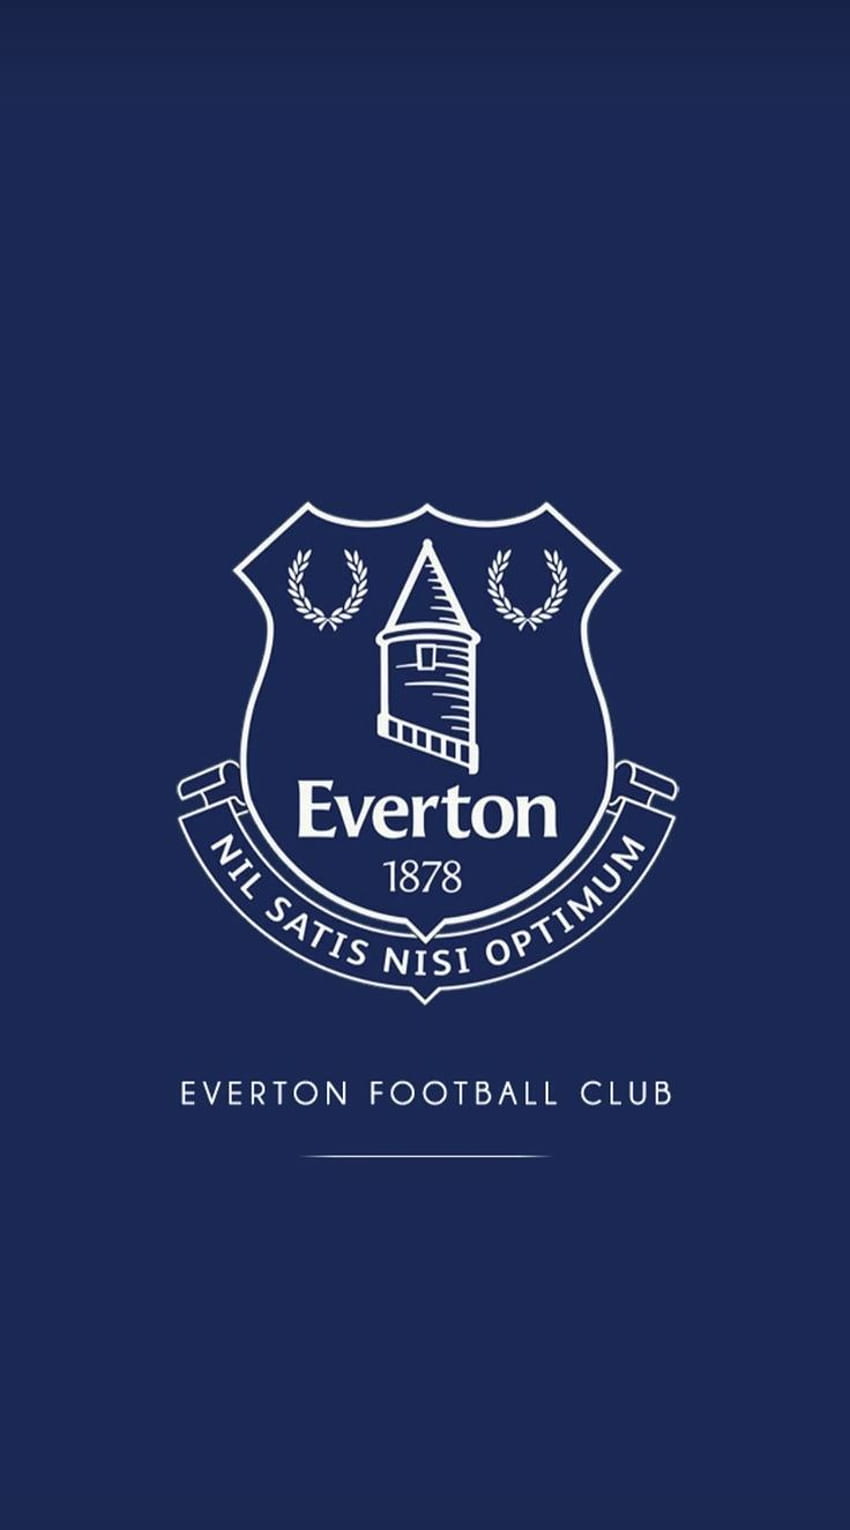 Everton FC crest vote opens after club motto U-turn - BBC News